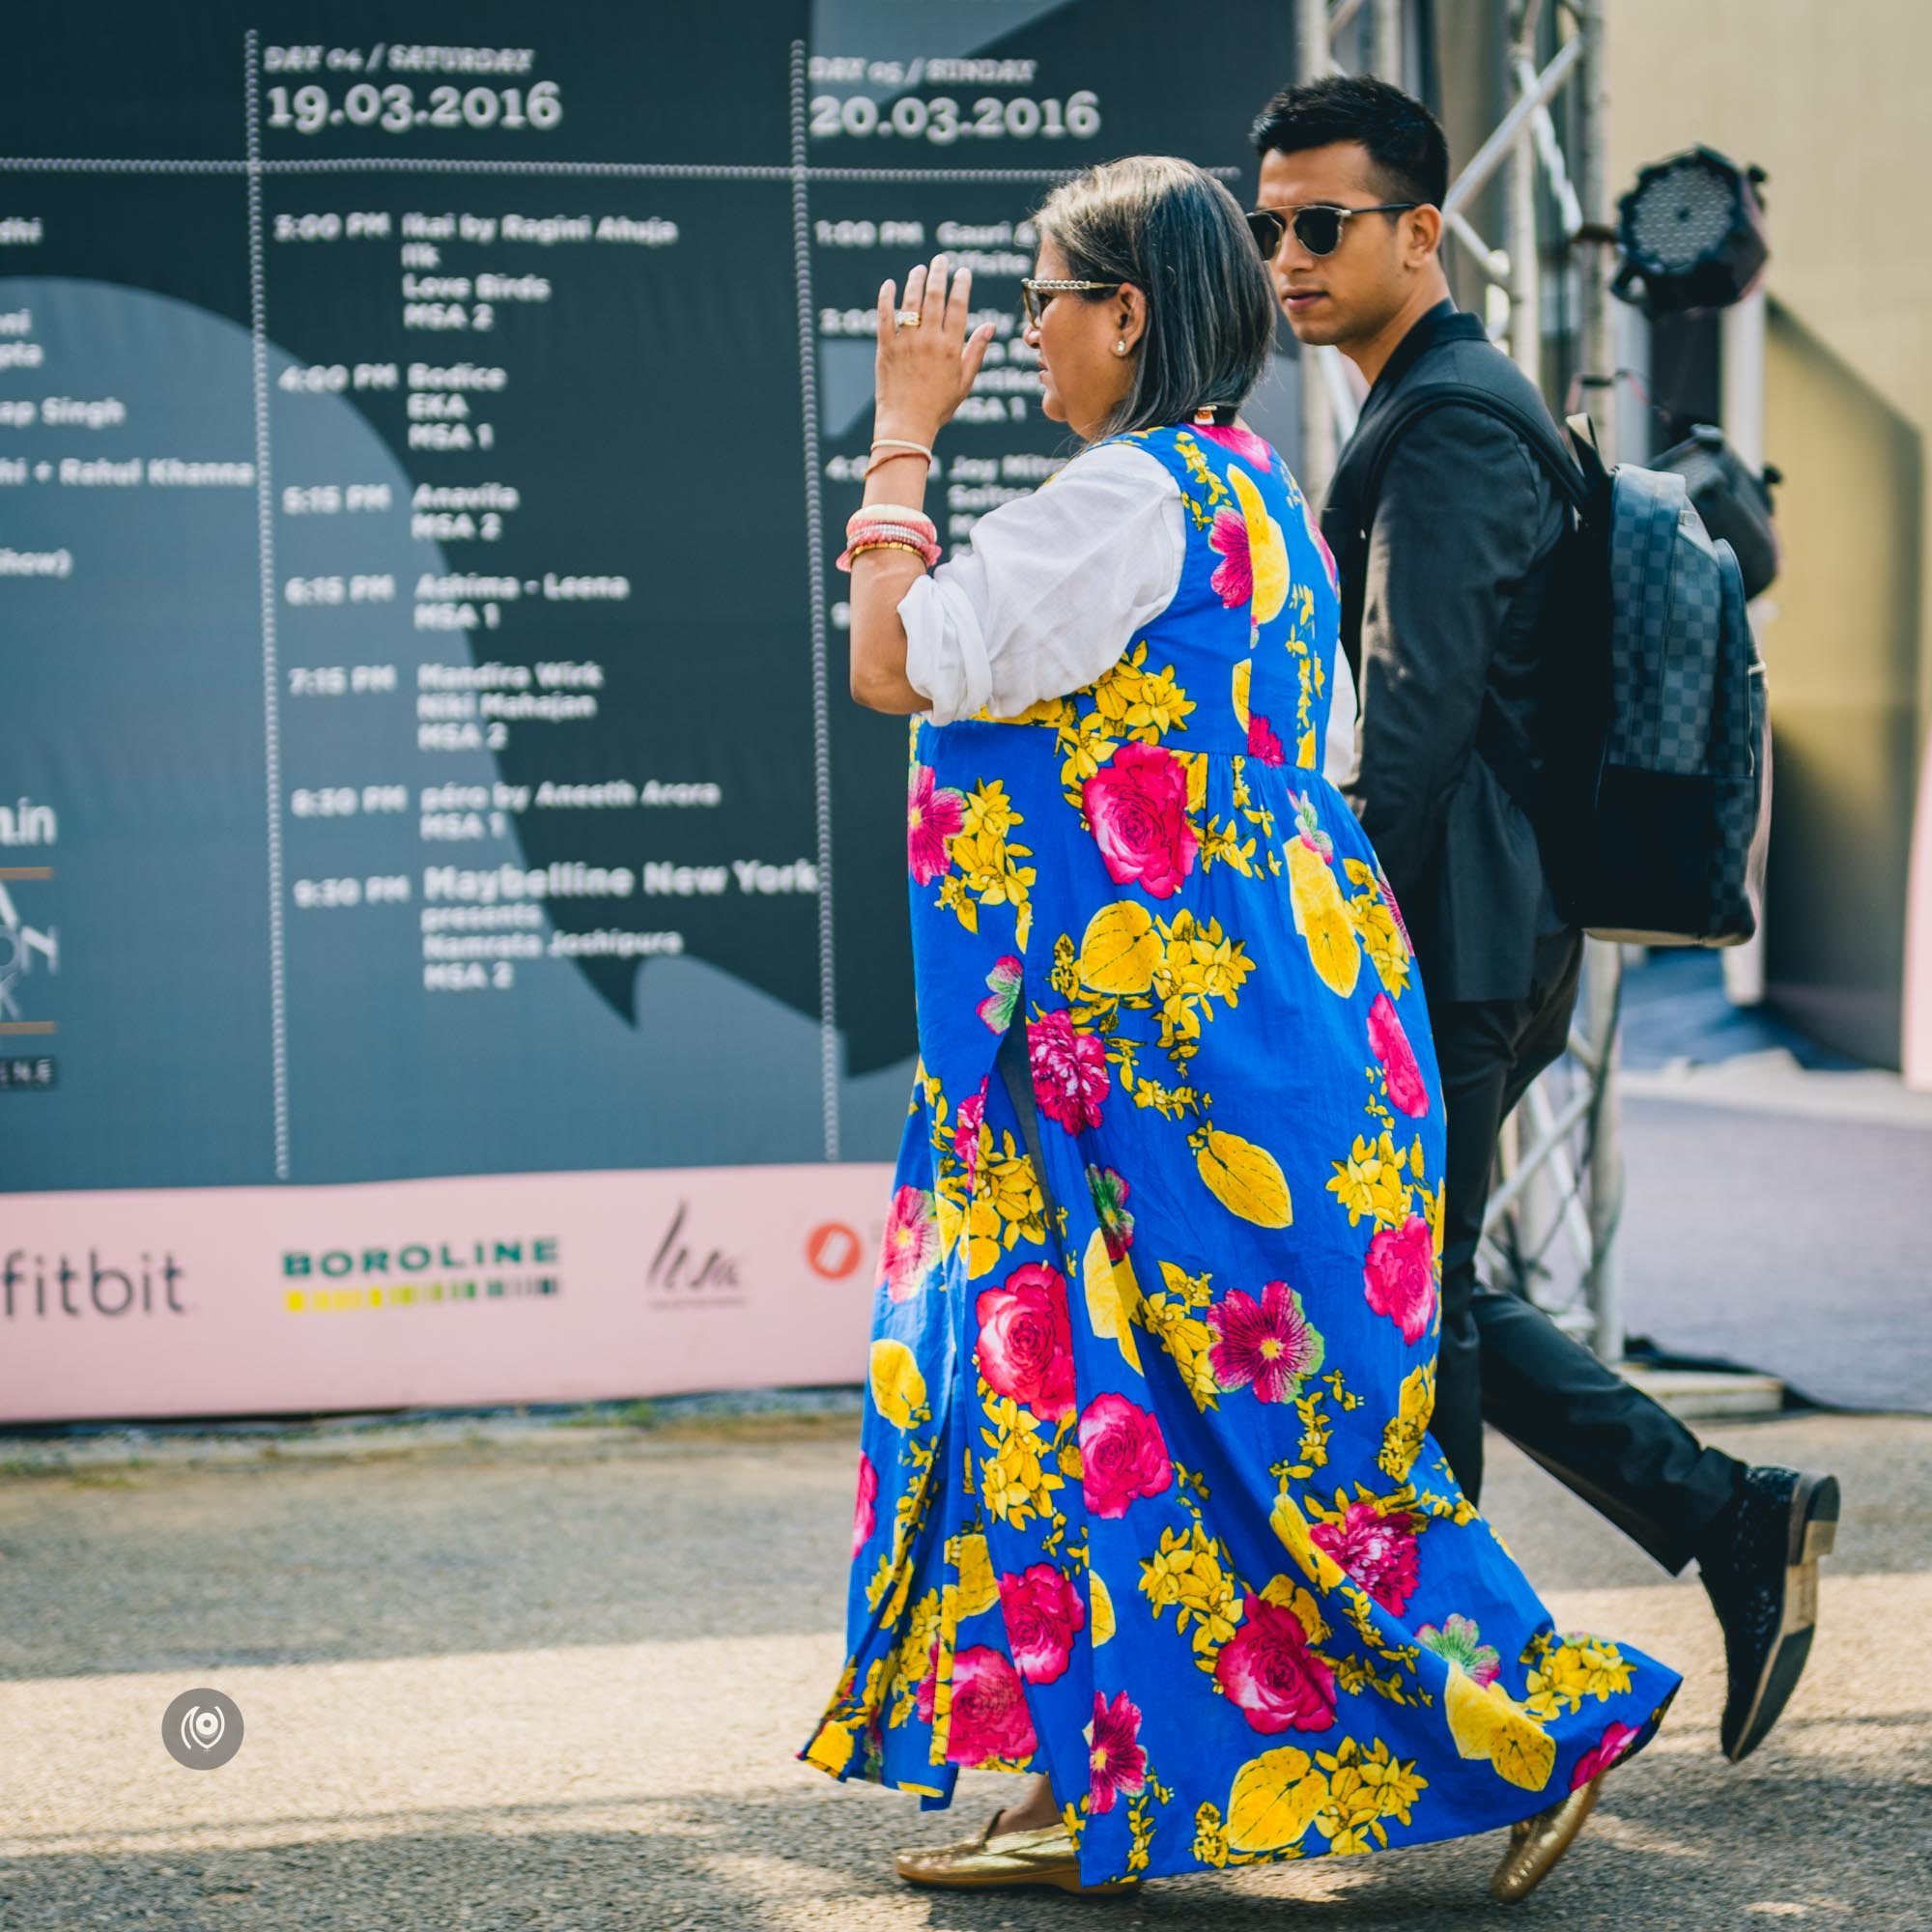 #EyesForStreetStyle, #AIFWAW16, Amazon India Fashion Week Autumn Winter 2016, Naina.co, Naina Redhu, Luxury Photographer, Lifestyle Photographer, Luxury Blogger, Lifestyle Blogger, Experience Collector, Personal Style